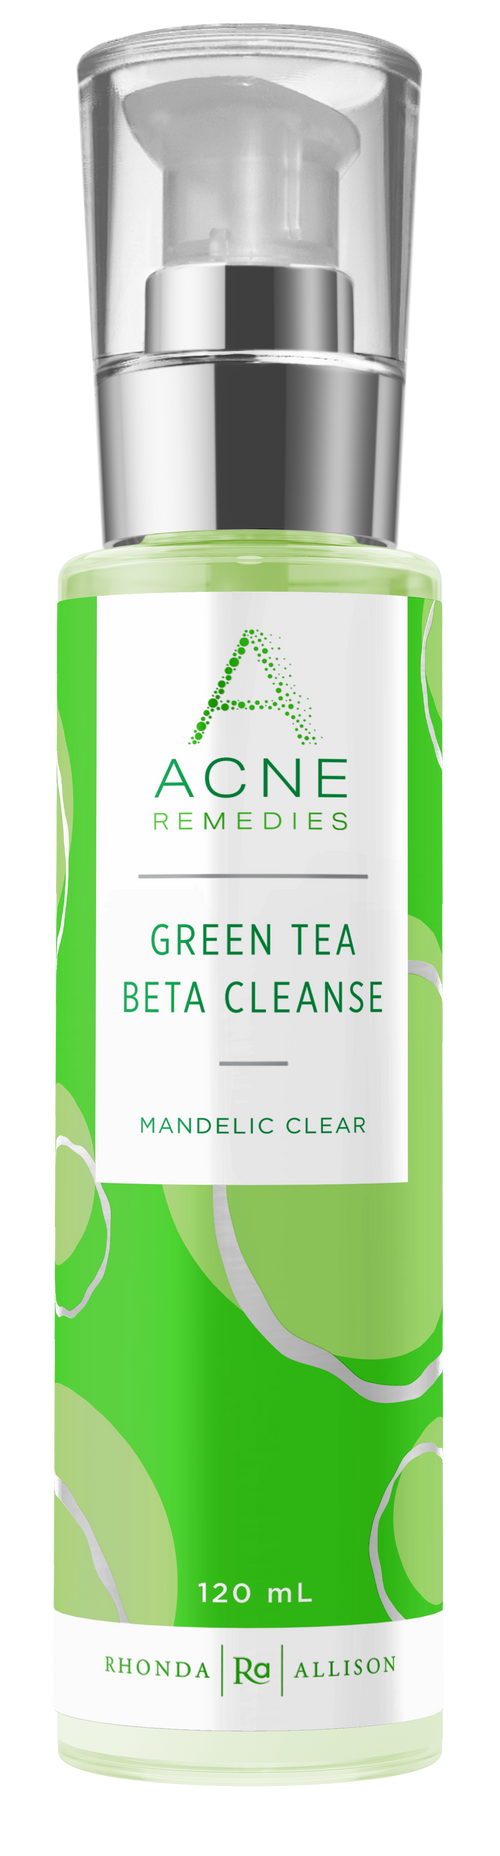 Green Tea Beta Cleanse - 30% OFF